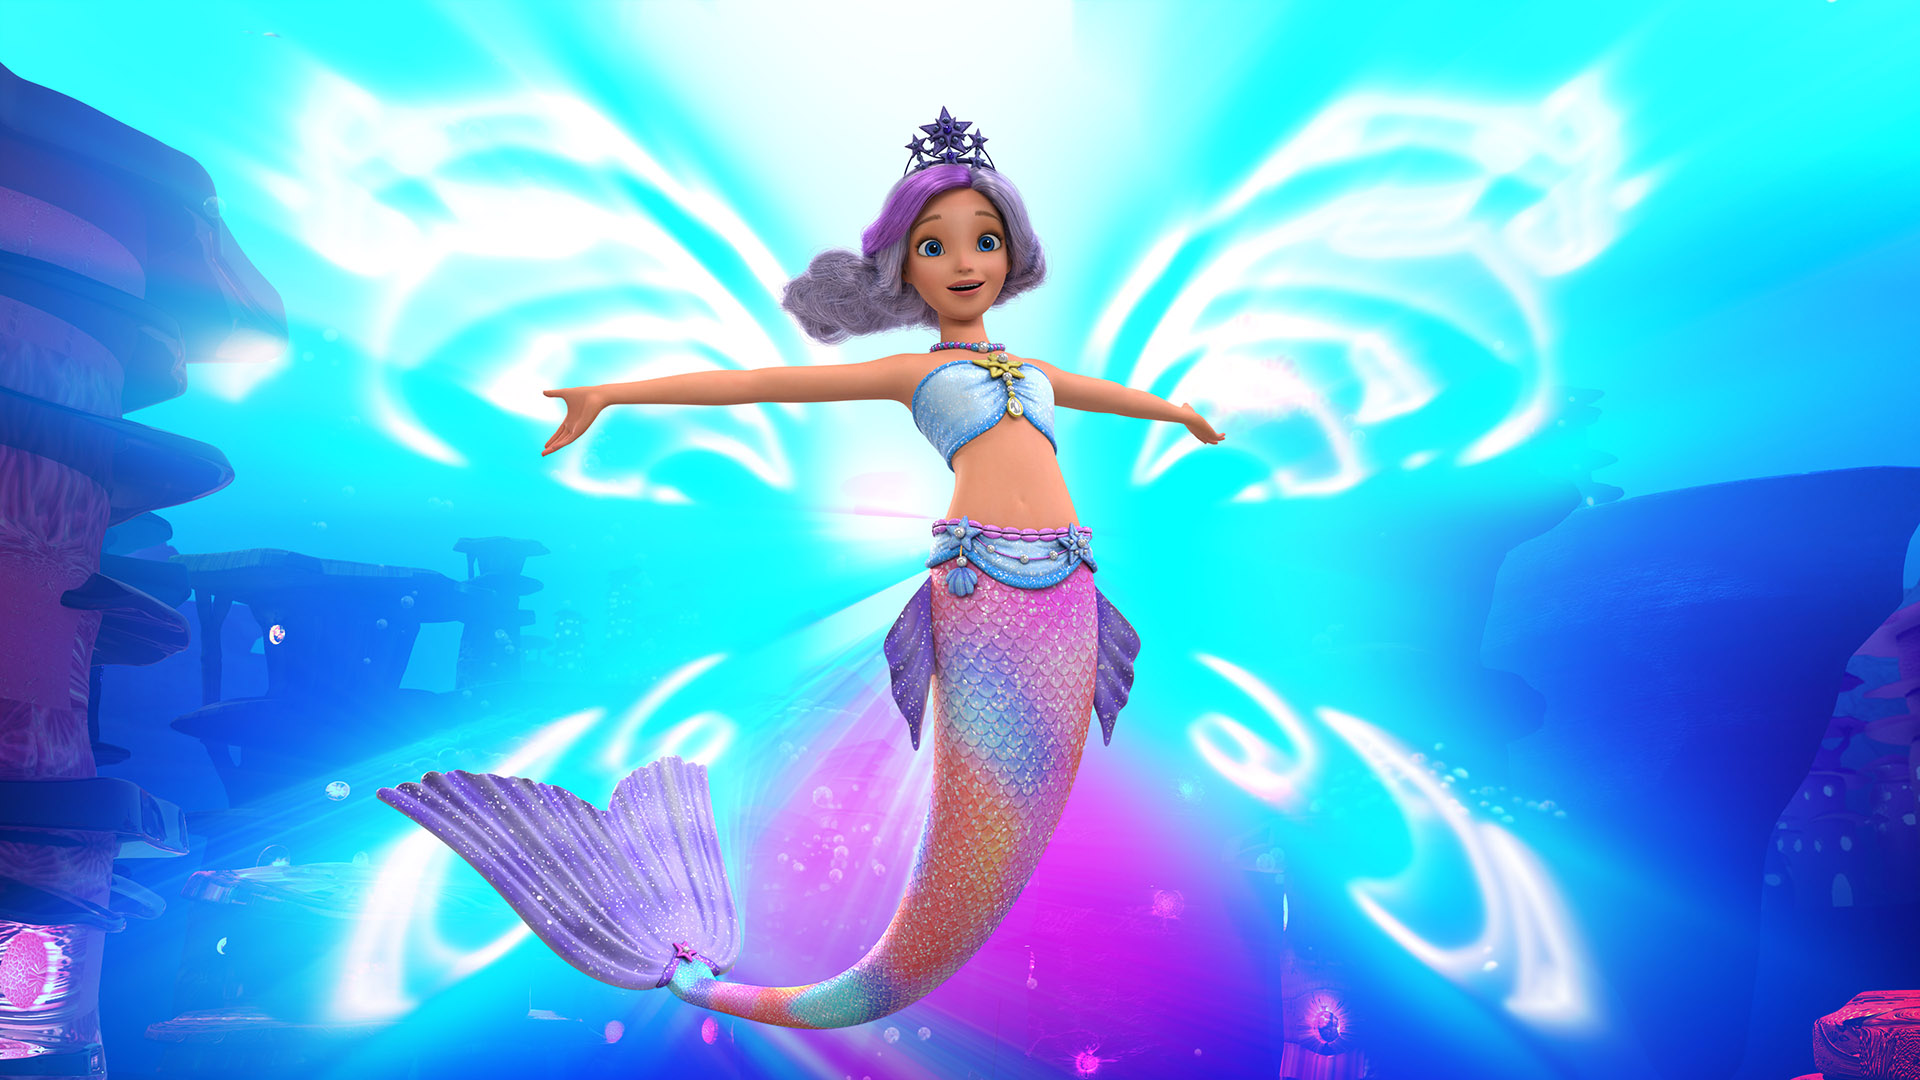 Watch Barbie Mermaid Power Today!